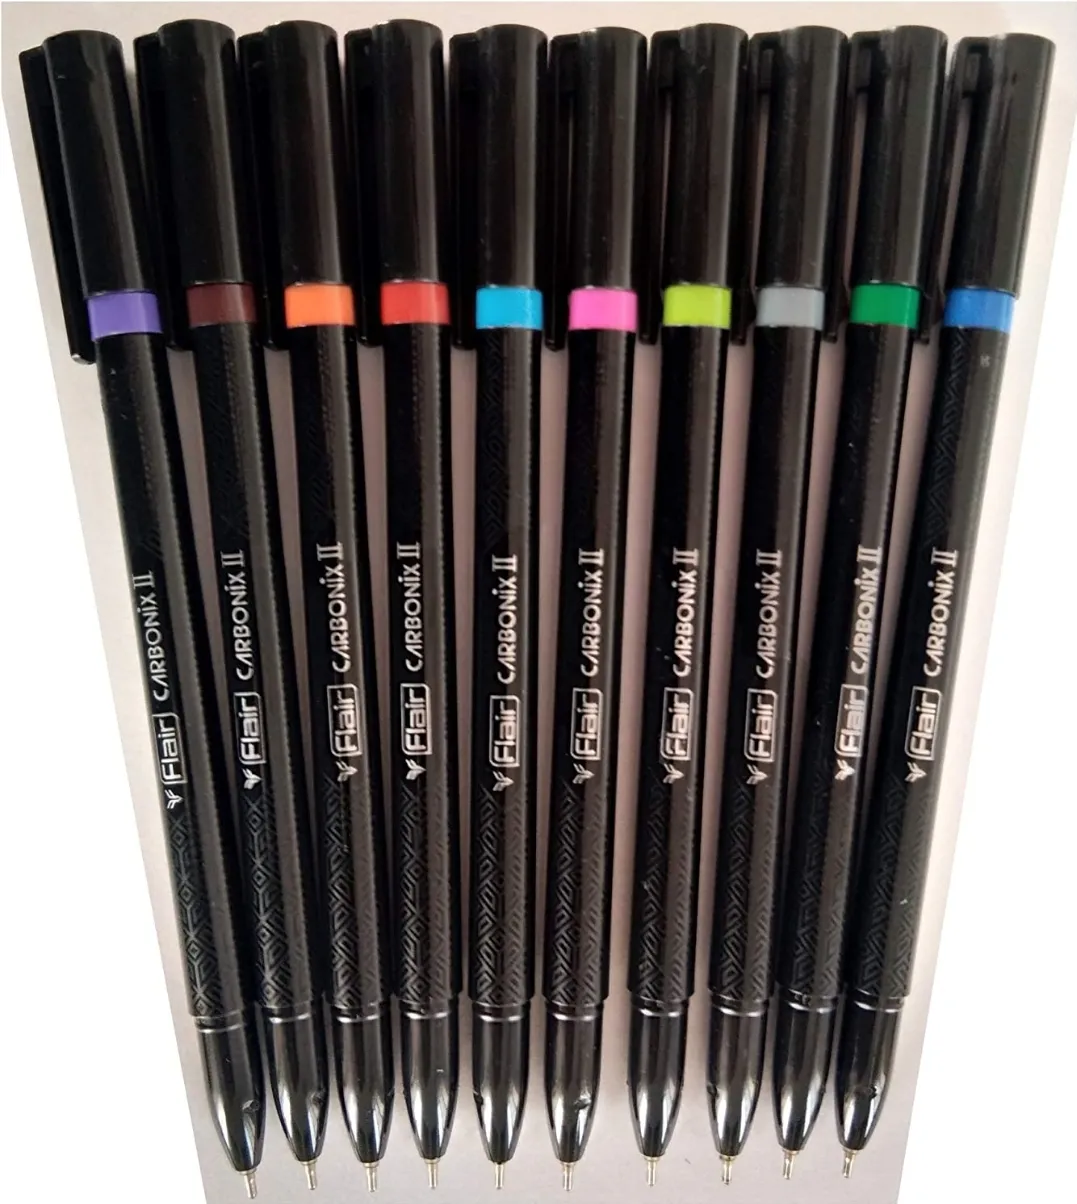 Flair Carbonix Assorted Ball Pen 1 Set of 10 Colour Ball Pen